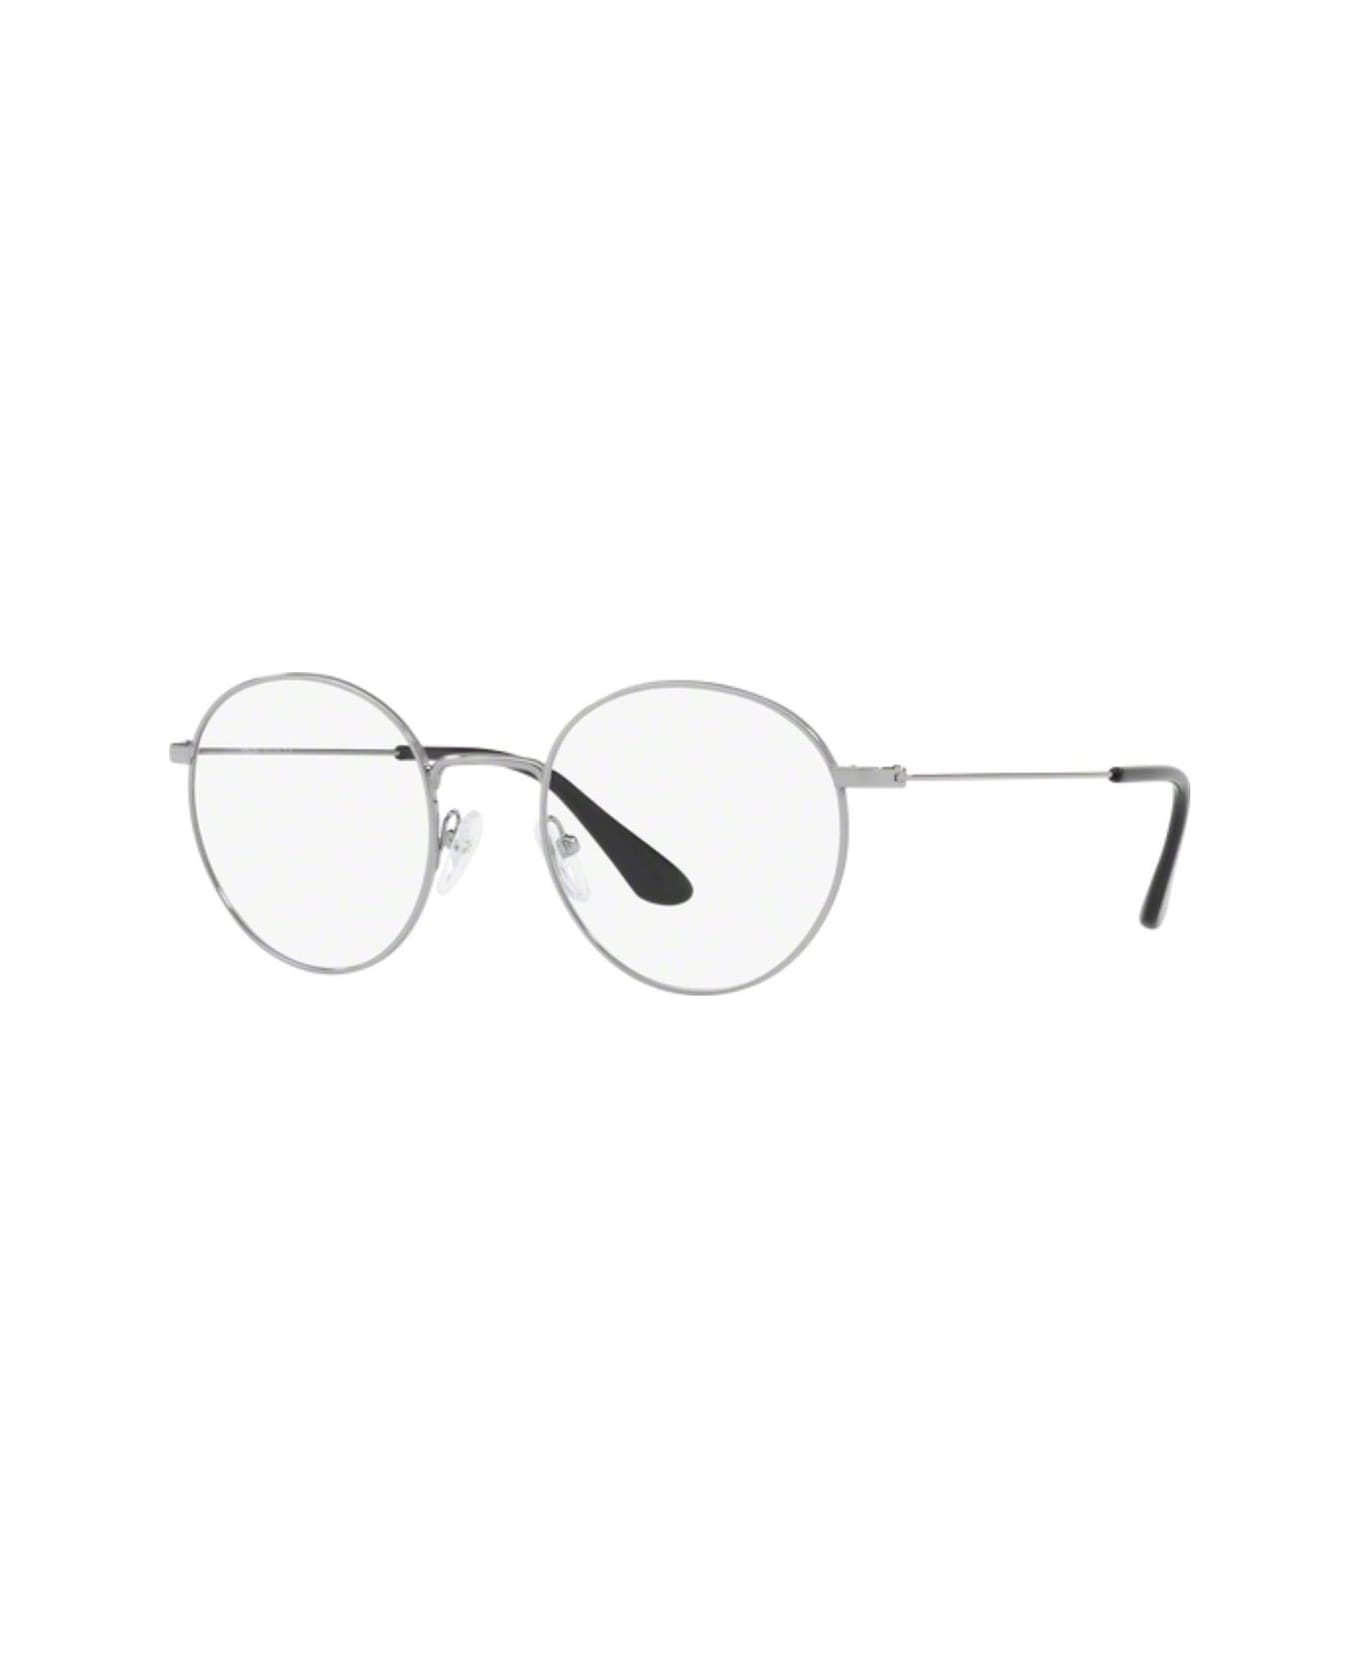 Prada Eyewear Pr 64tv Glasses - Argento